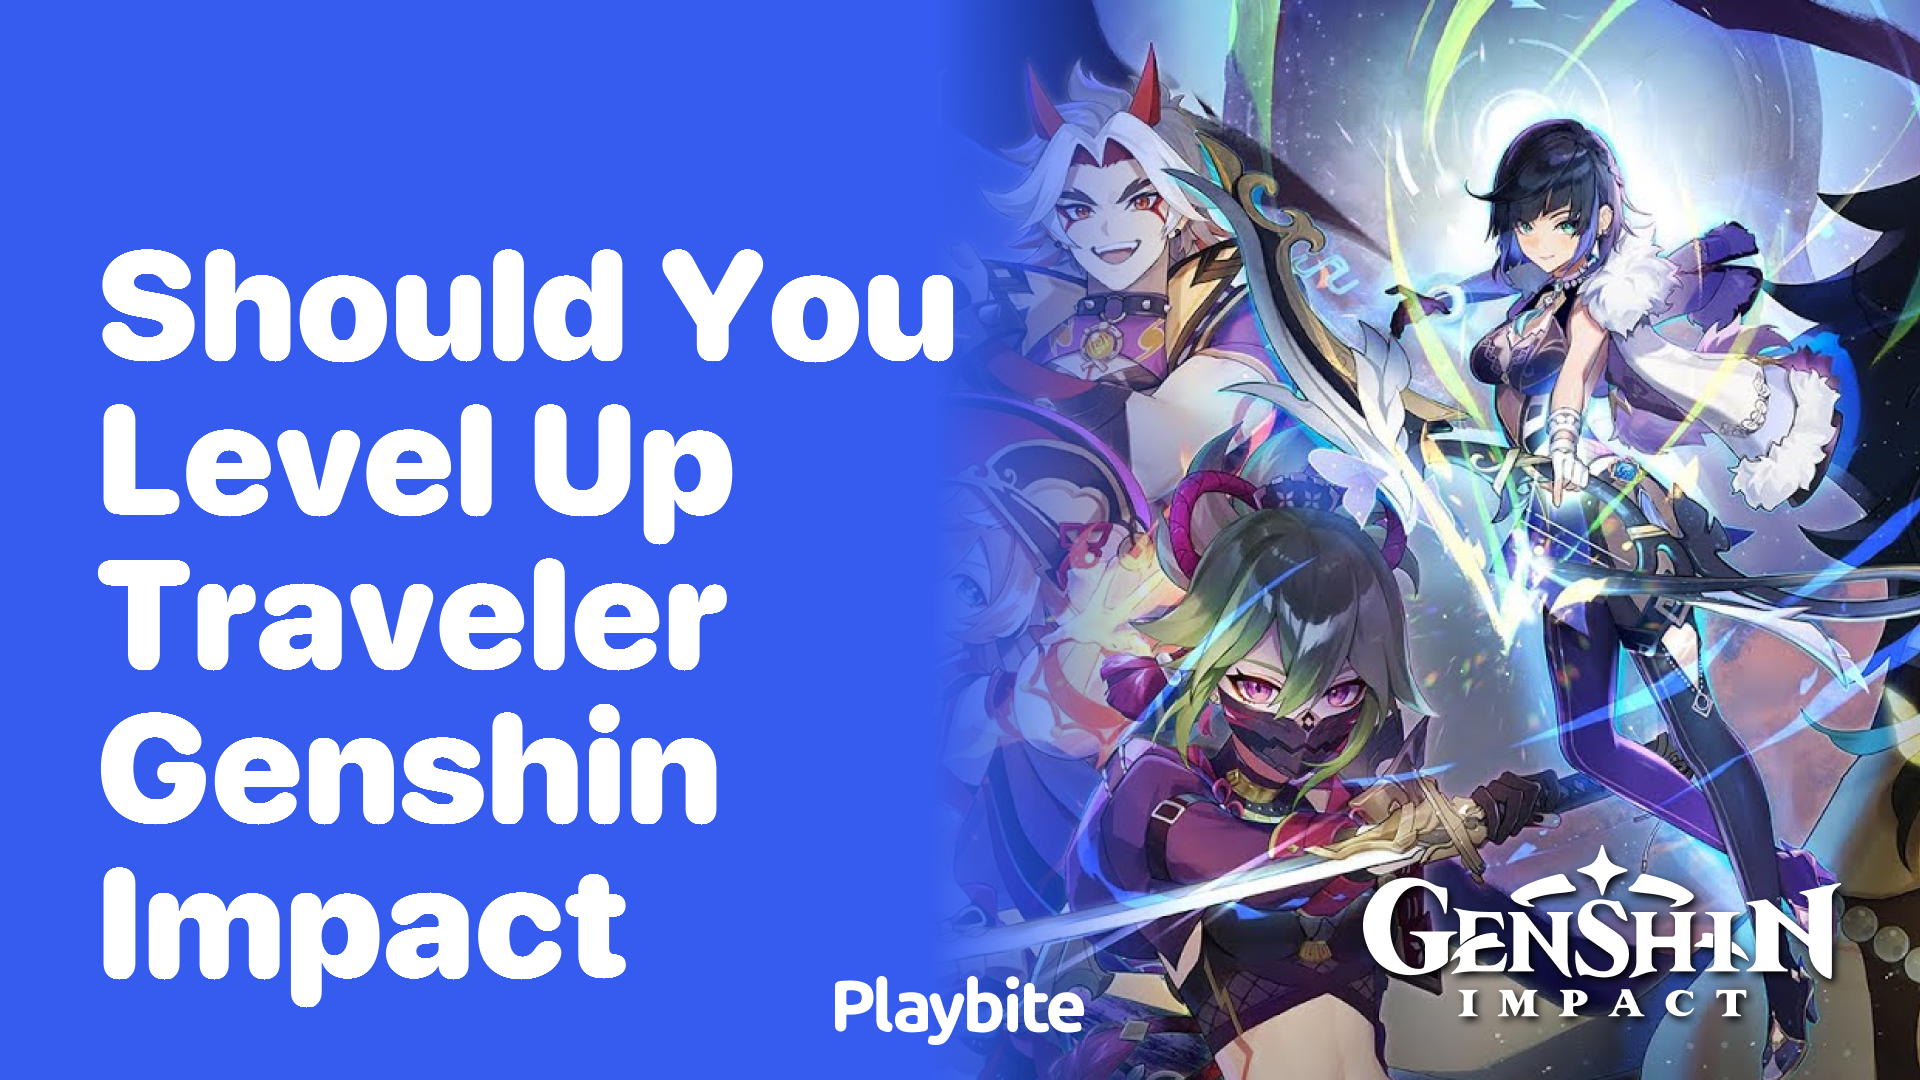 Should You Level Up Traveler in Genshin Impact?